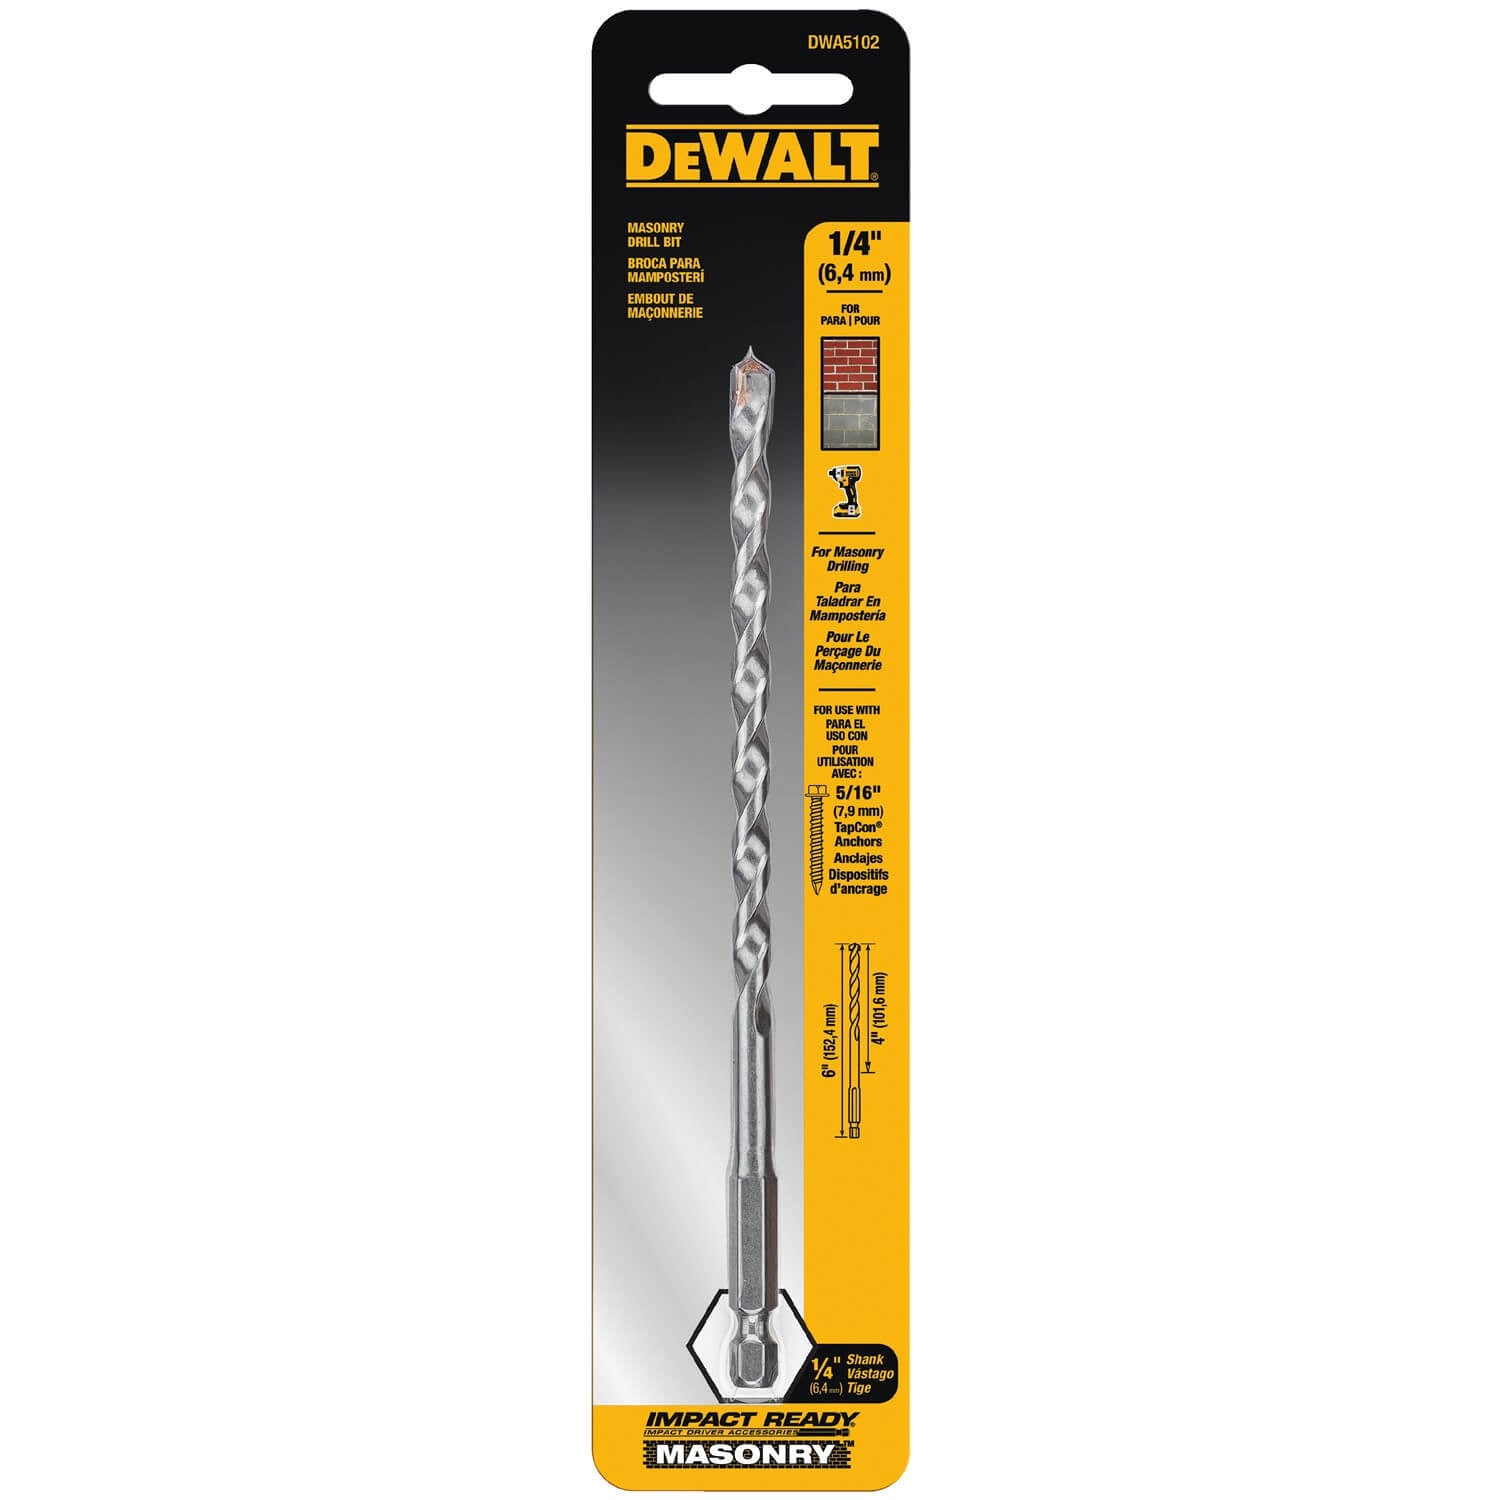 DEWALT, Dewalt DWA5102 - 1/4X4X6IN IMPACT READY MASONRY BIT